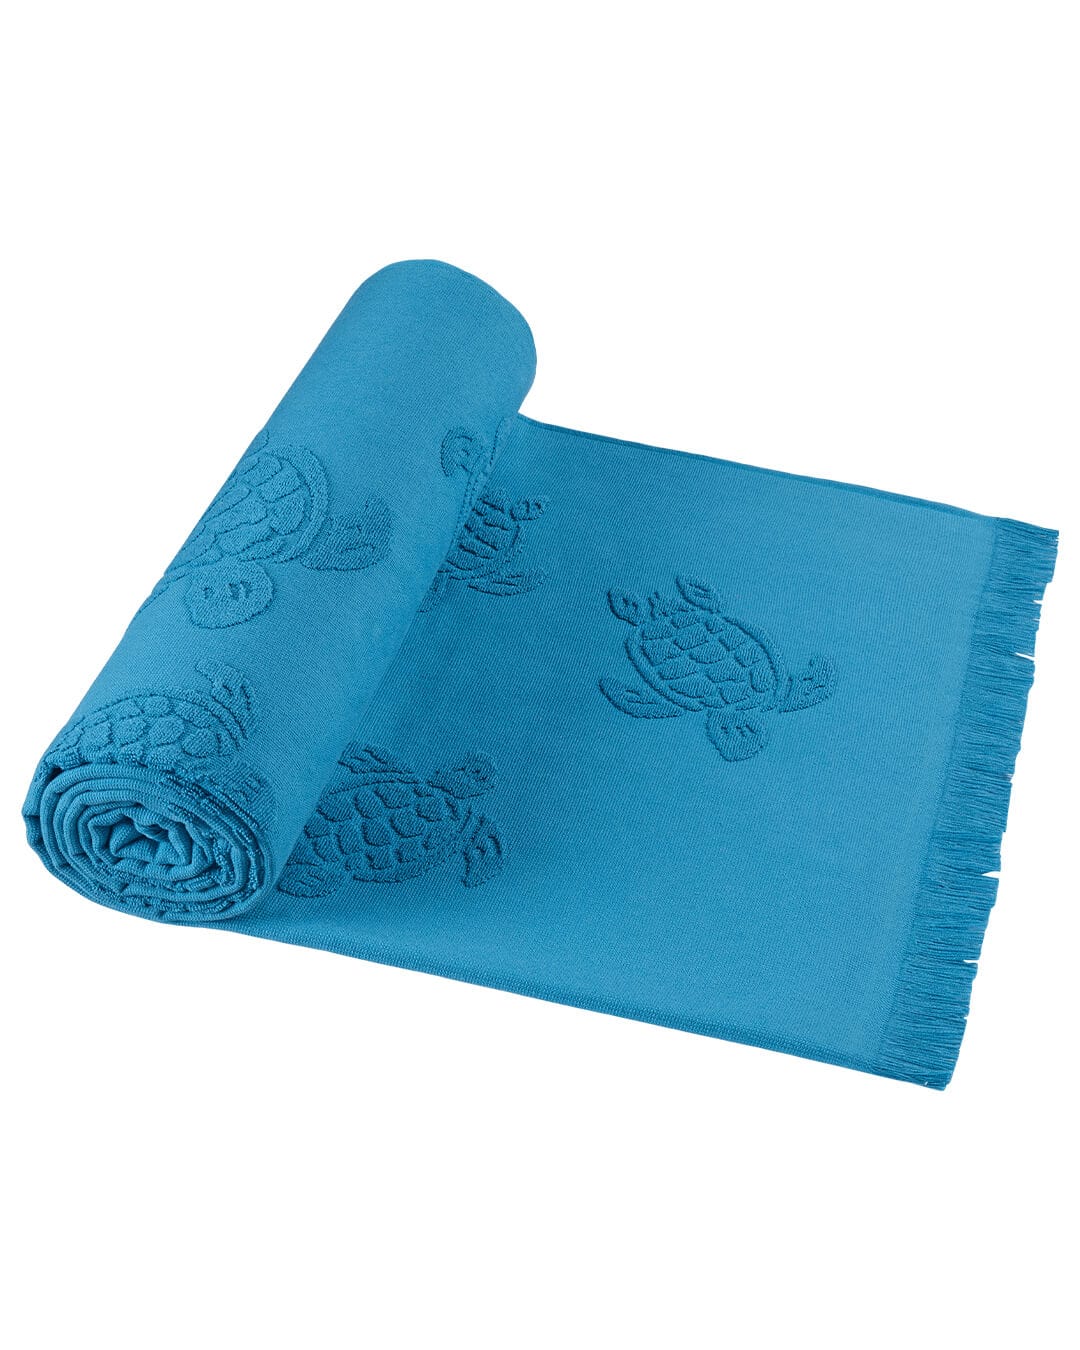 Vilebrequin Towel One Size Vilebrequin Organic Cotton Blue Beach Towel Turtles Jacquard